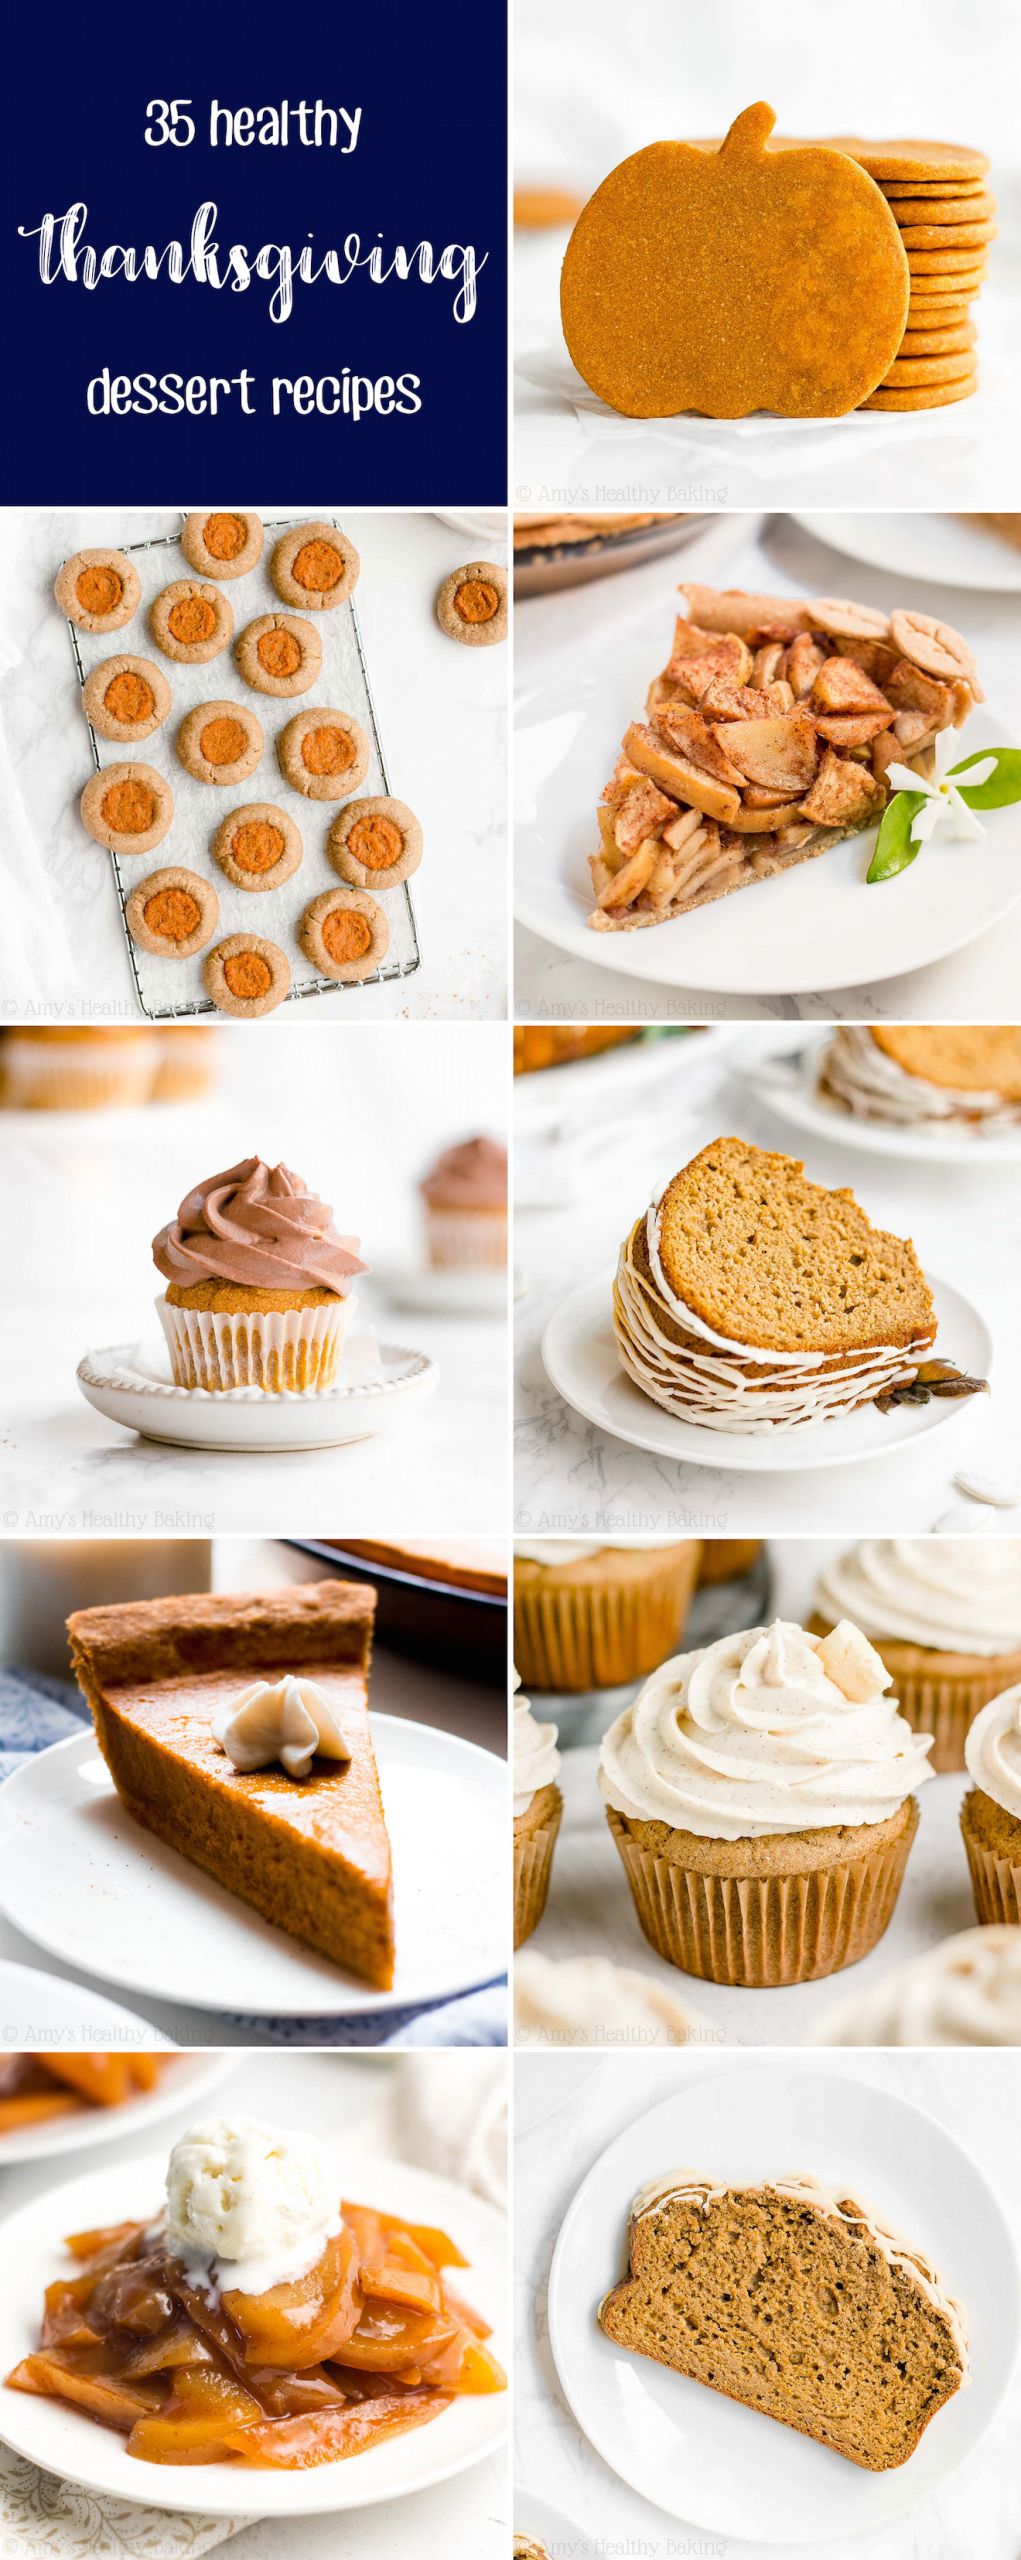 Low Calorie Thanksgiving Desserts
 35 Healthy Thanksgiving Dessert Recipes